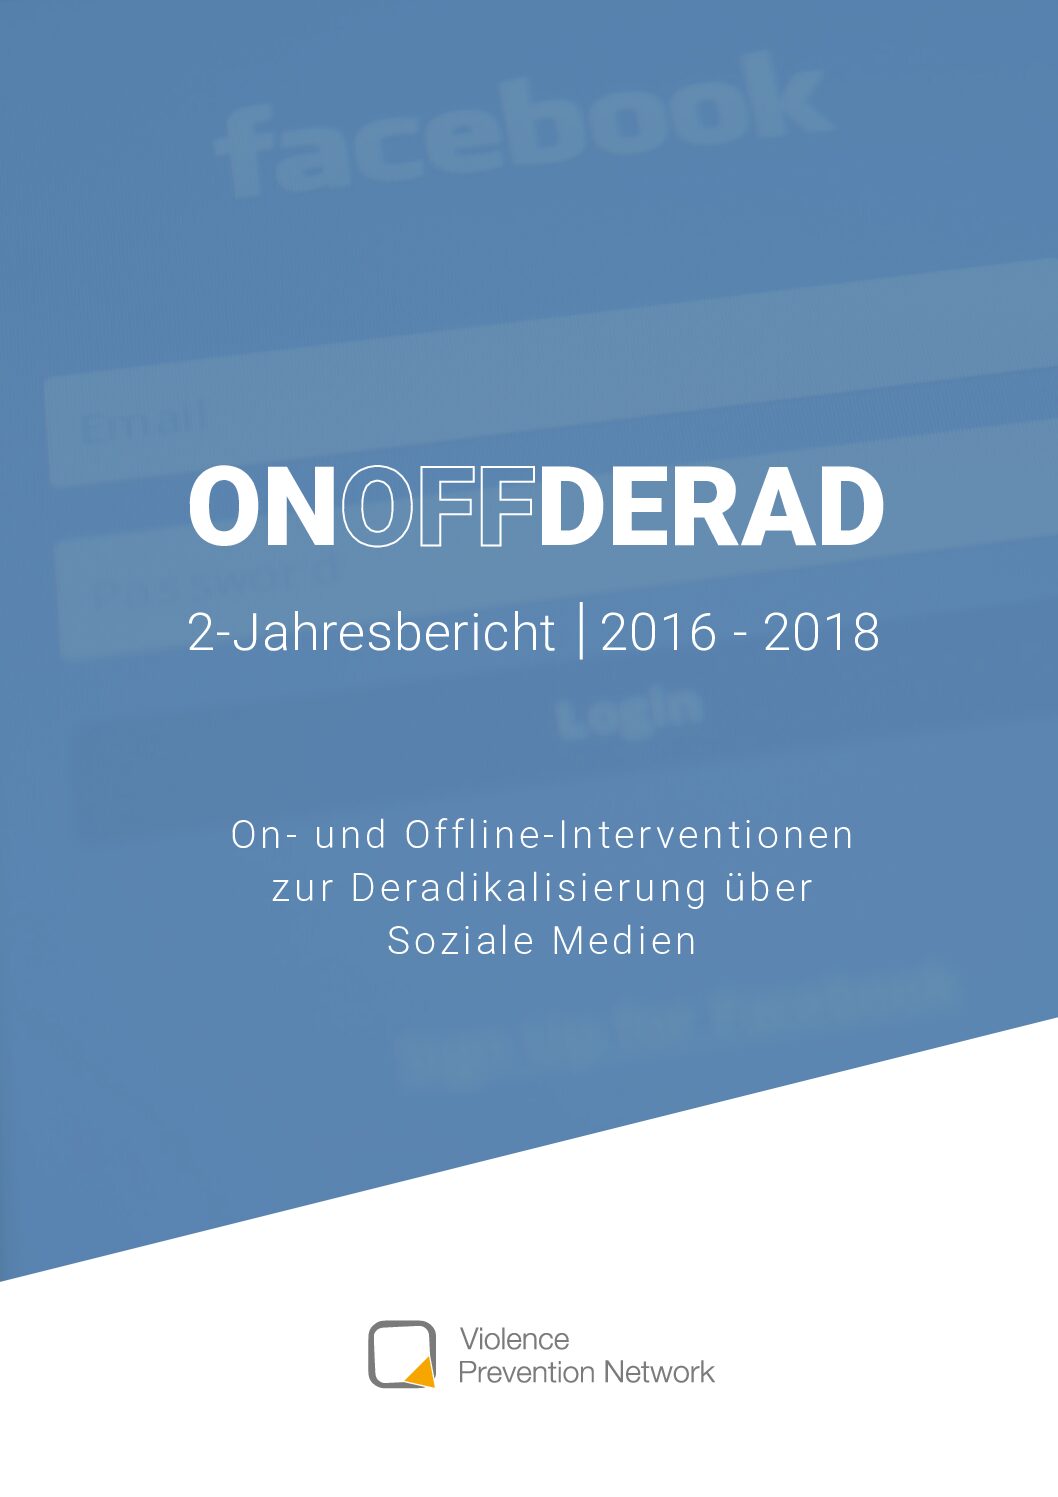 OnOff-DERAD-2-Jahresbericht-DE